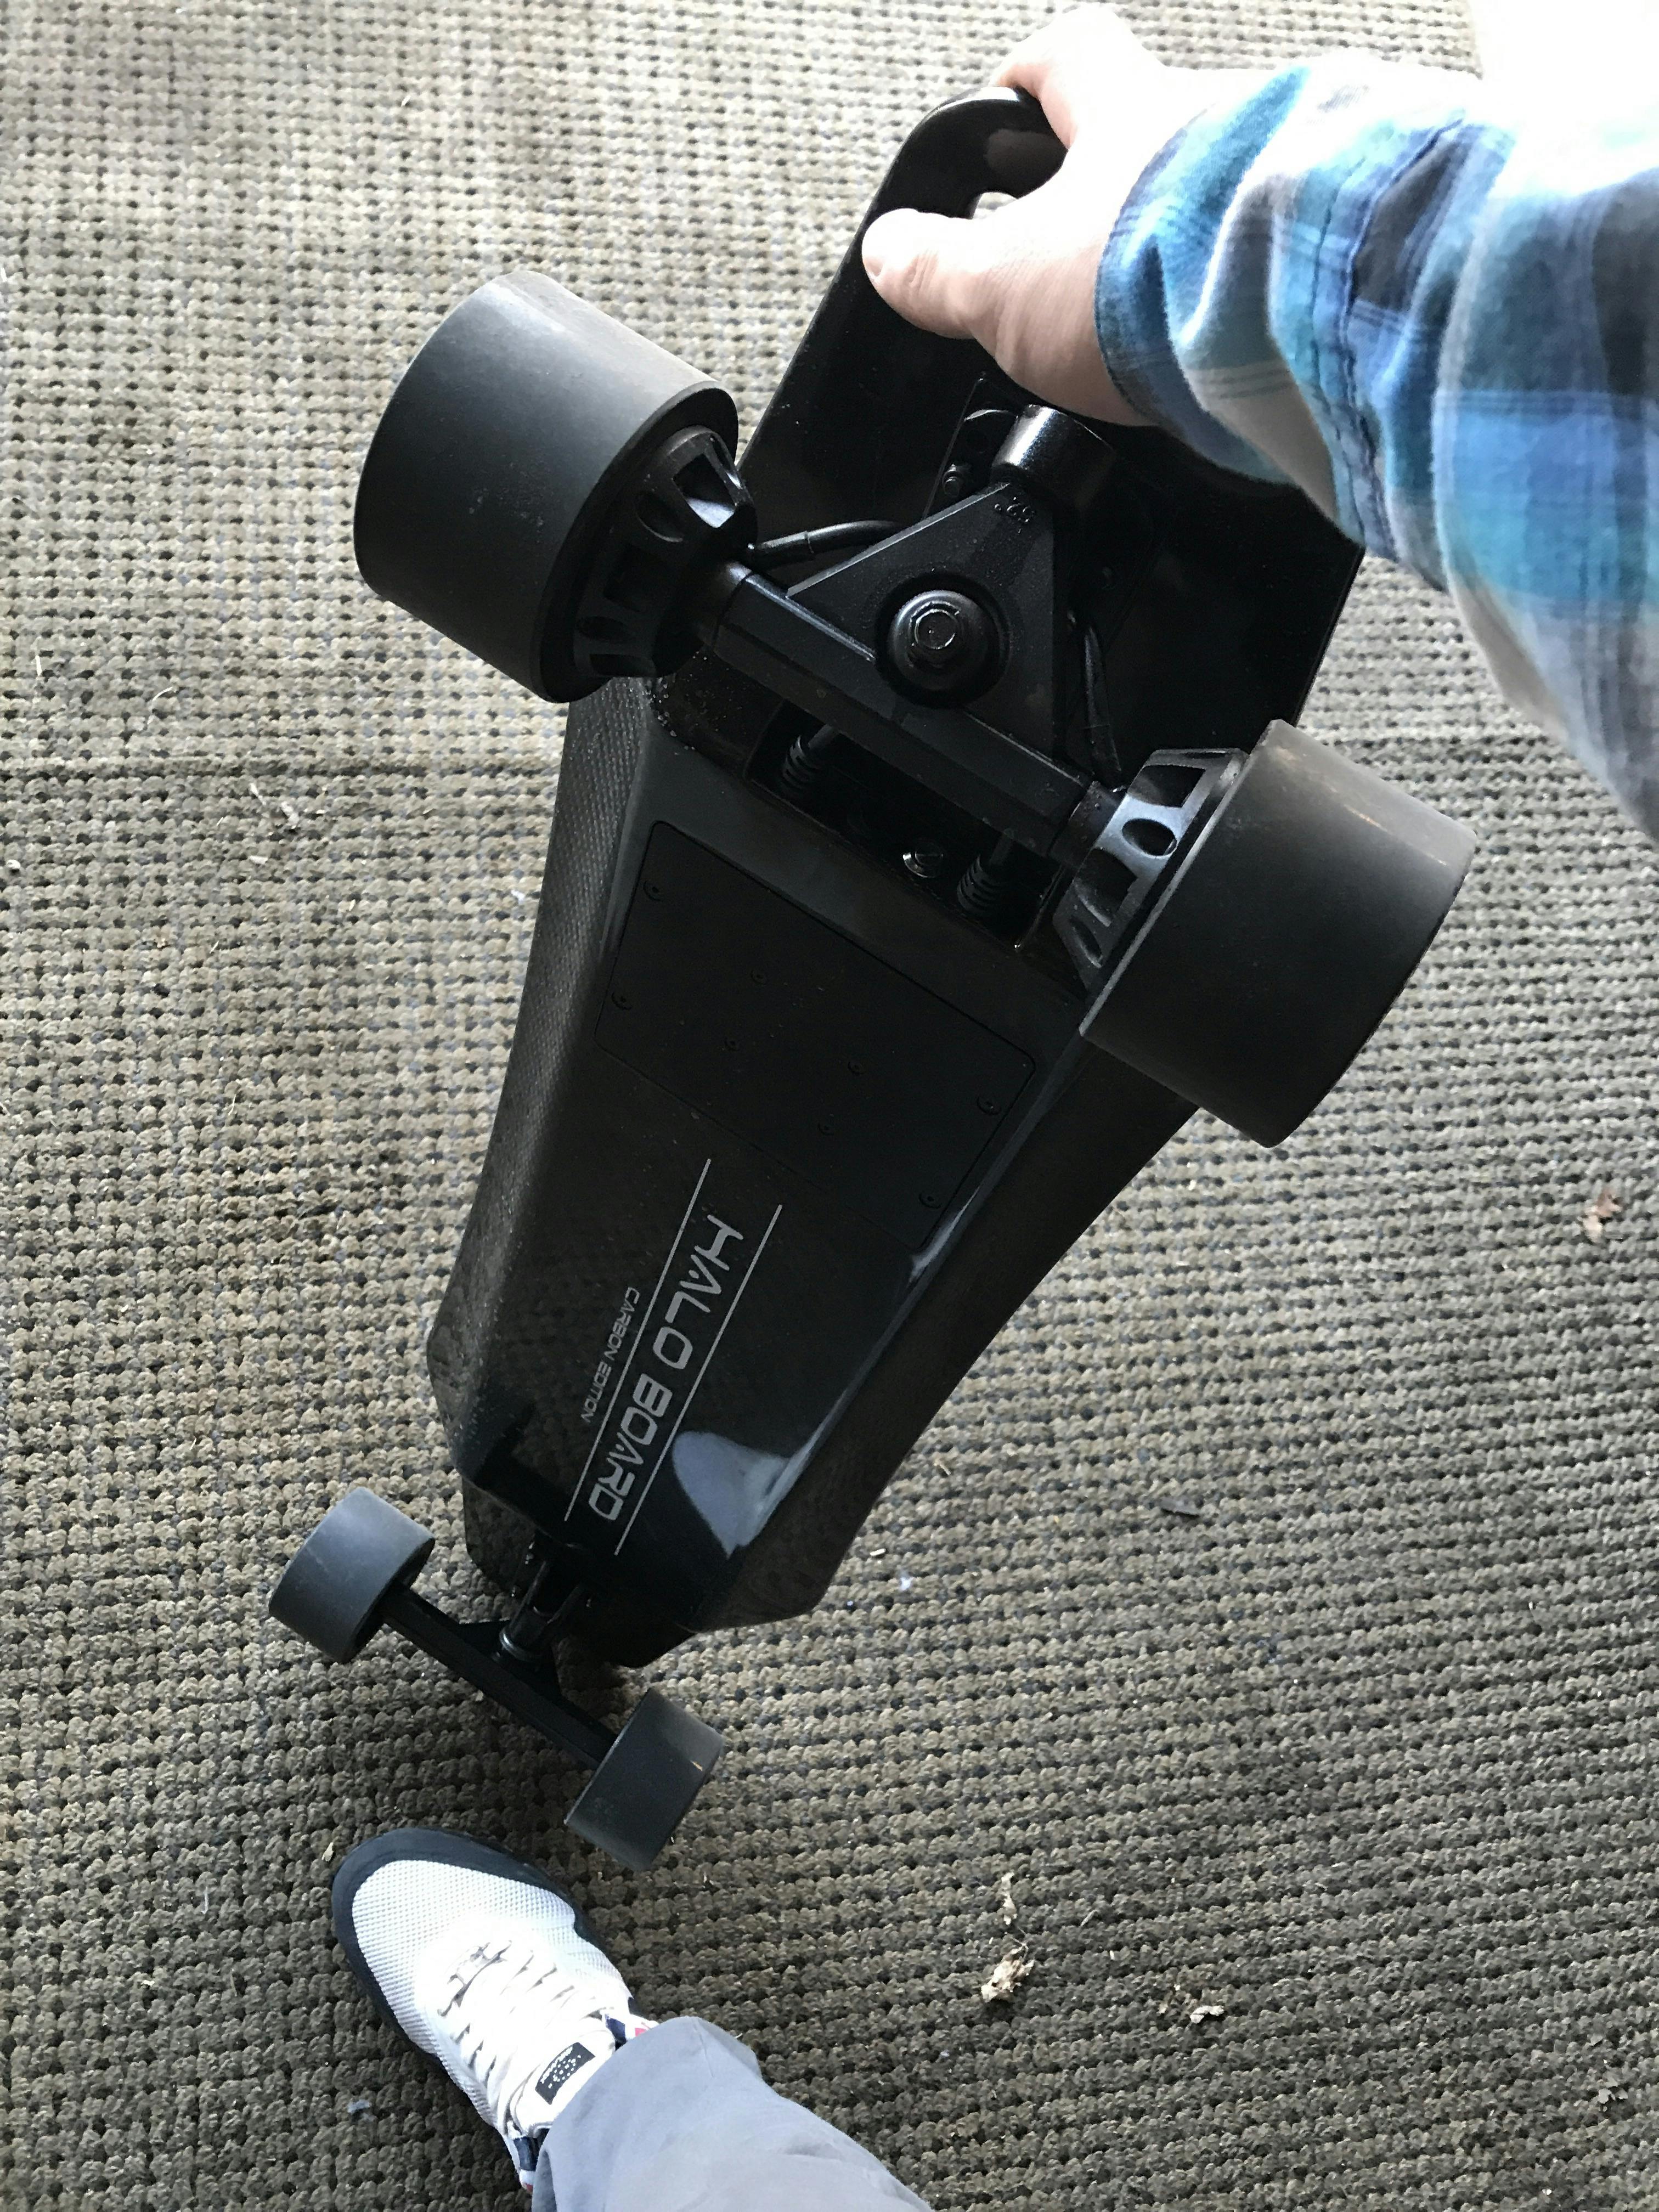 Halo Board Electric Skateboard